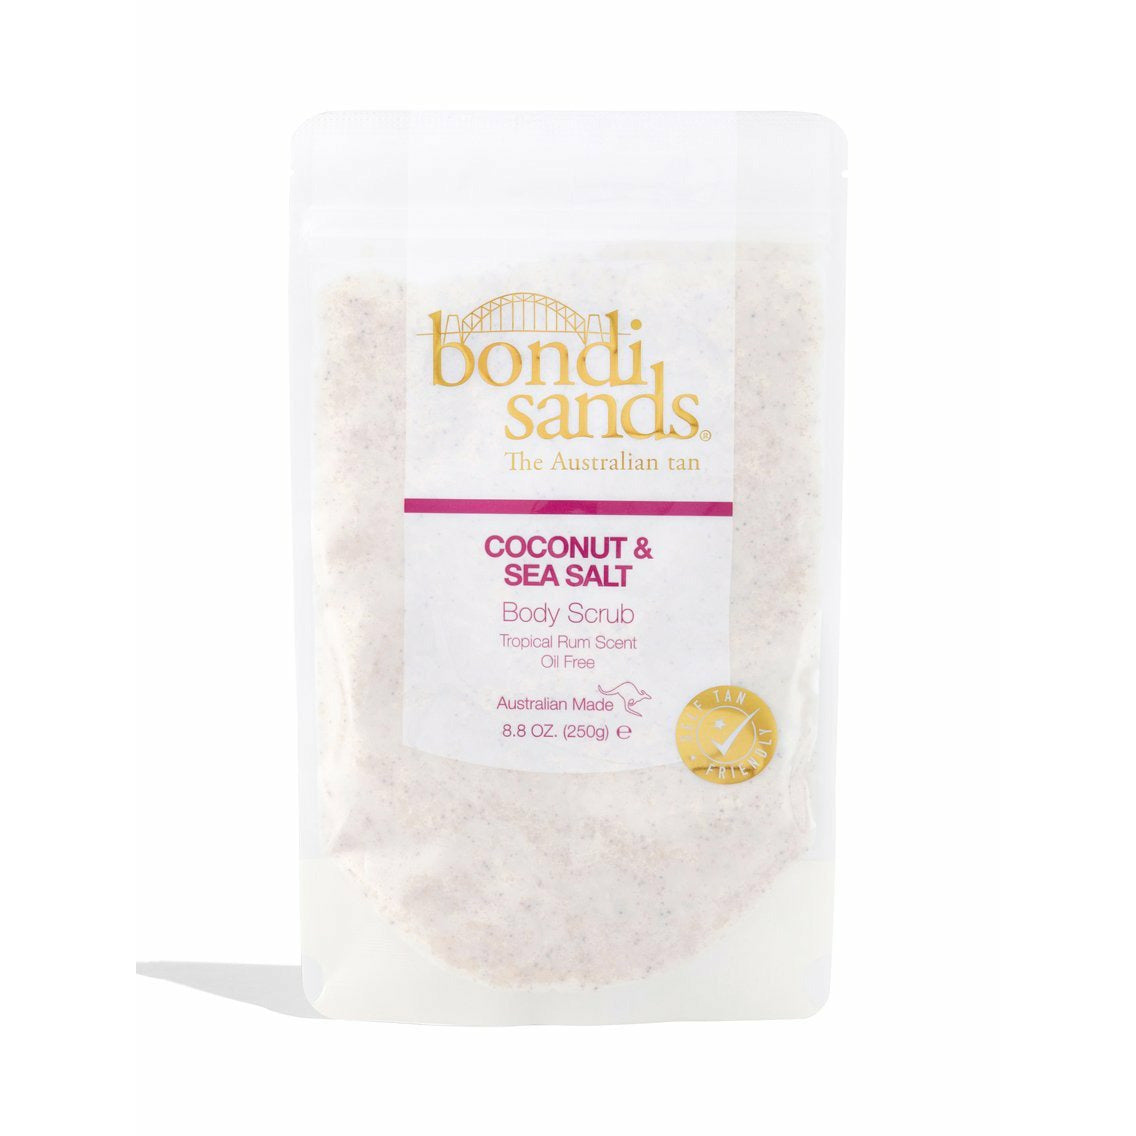 Bondi Sands - Tropical Rum Coconut & Sea Salt Body Scrub Bondi Sands